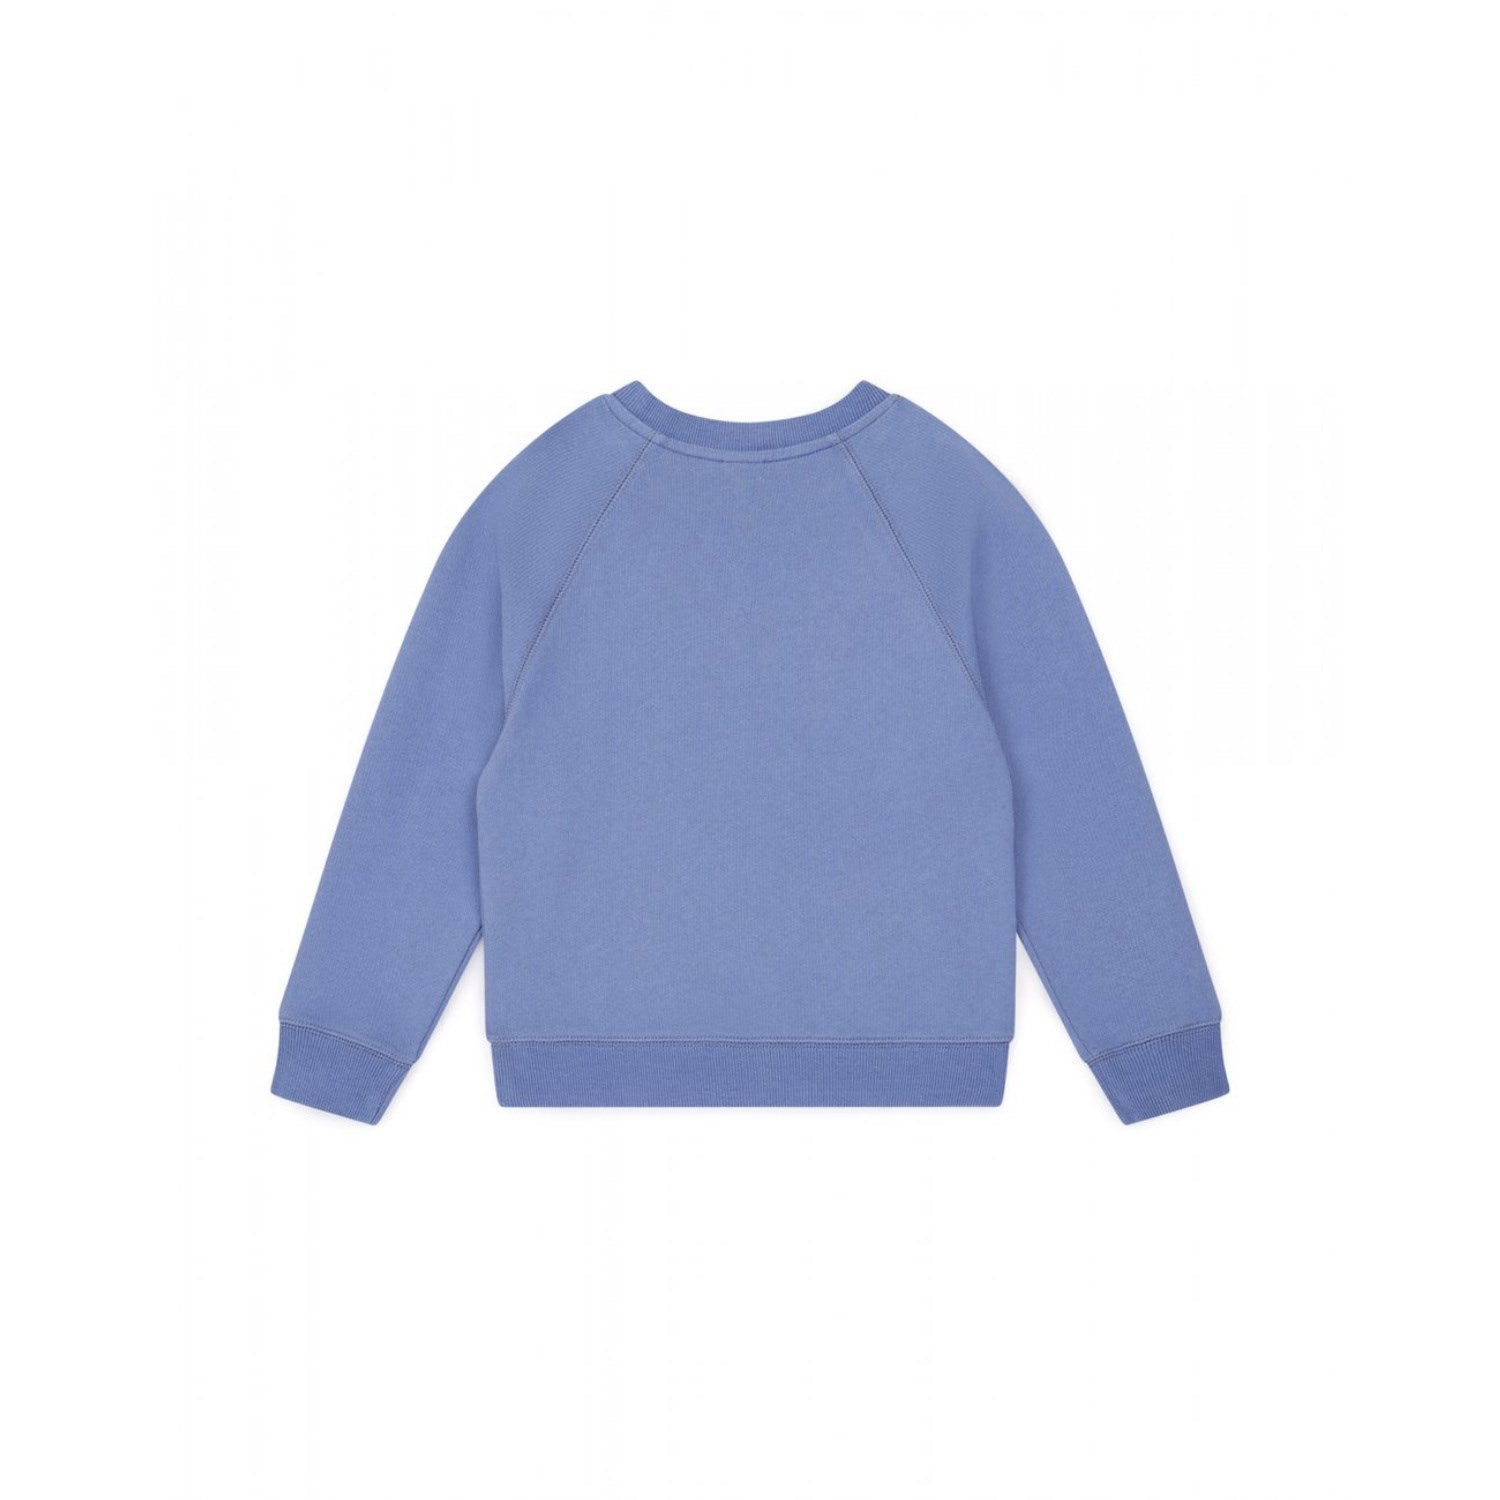 BONTON Bleu Trianon Star Sweatshirt 3